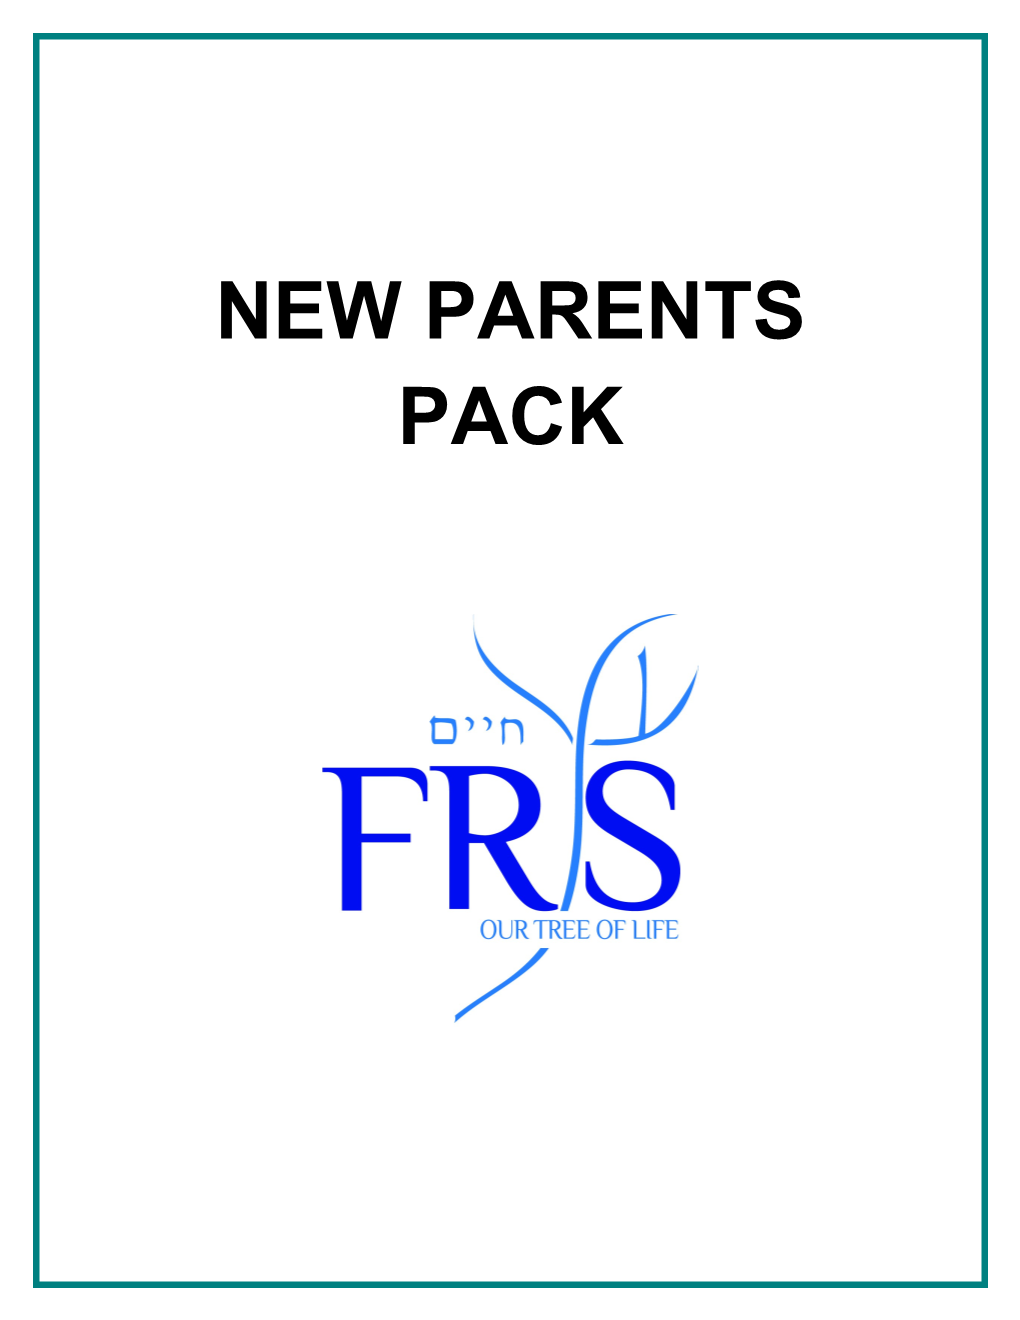 New Parents Pack